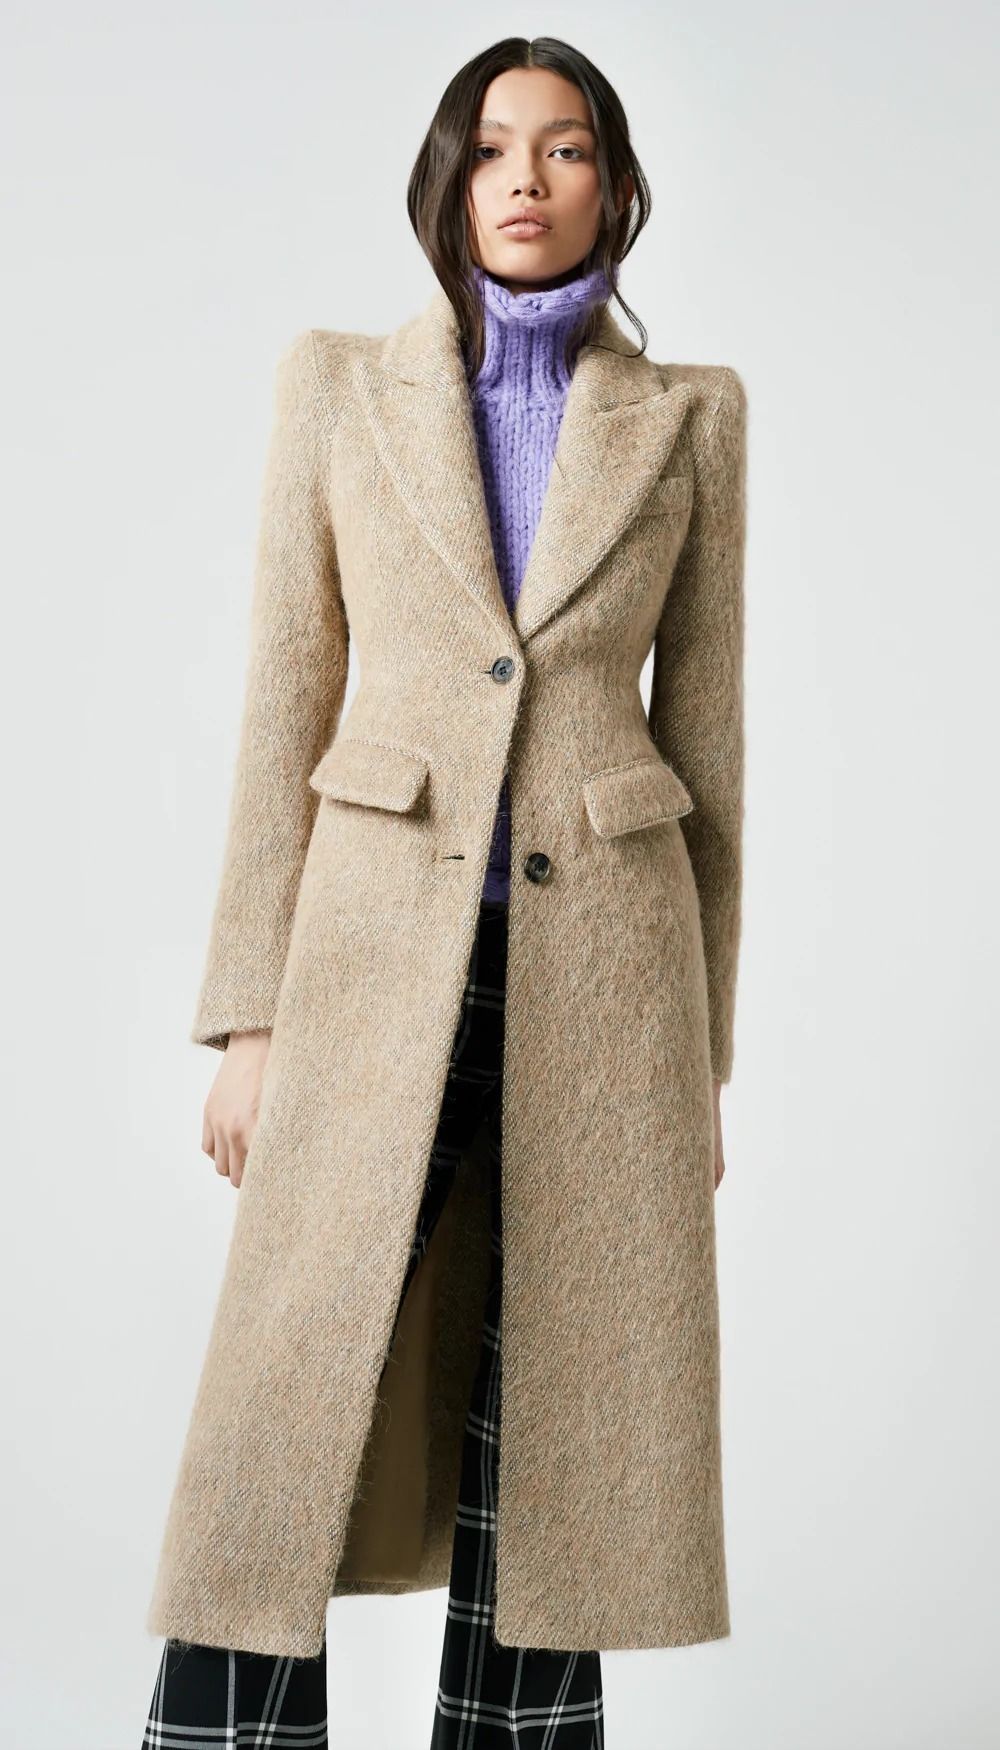 stylish winter jackets for women